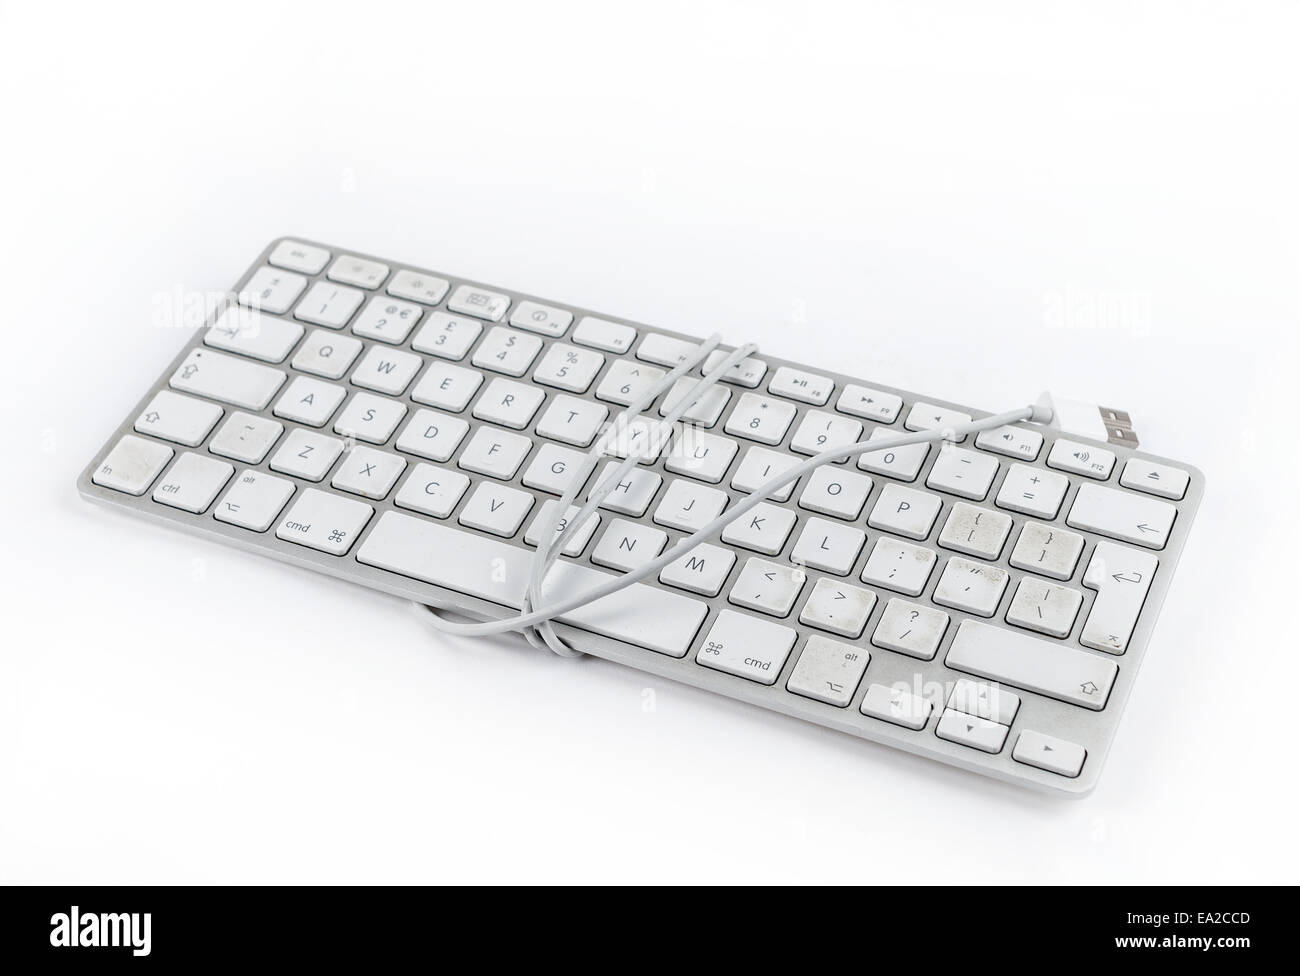 ② Apple USB Keyboard for Clear Lime Green iMac Power Mac G3 G4